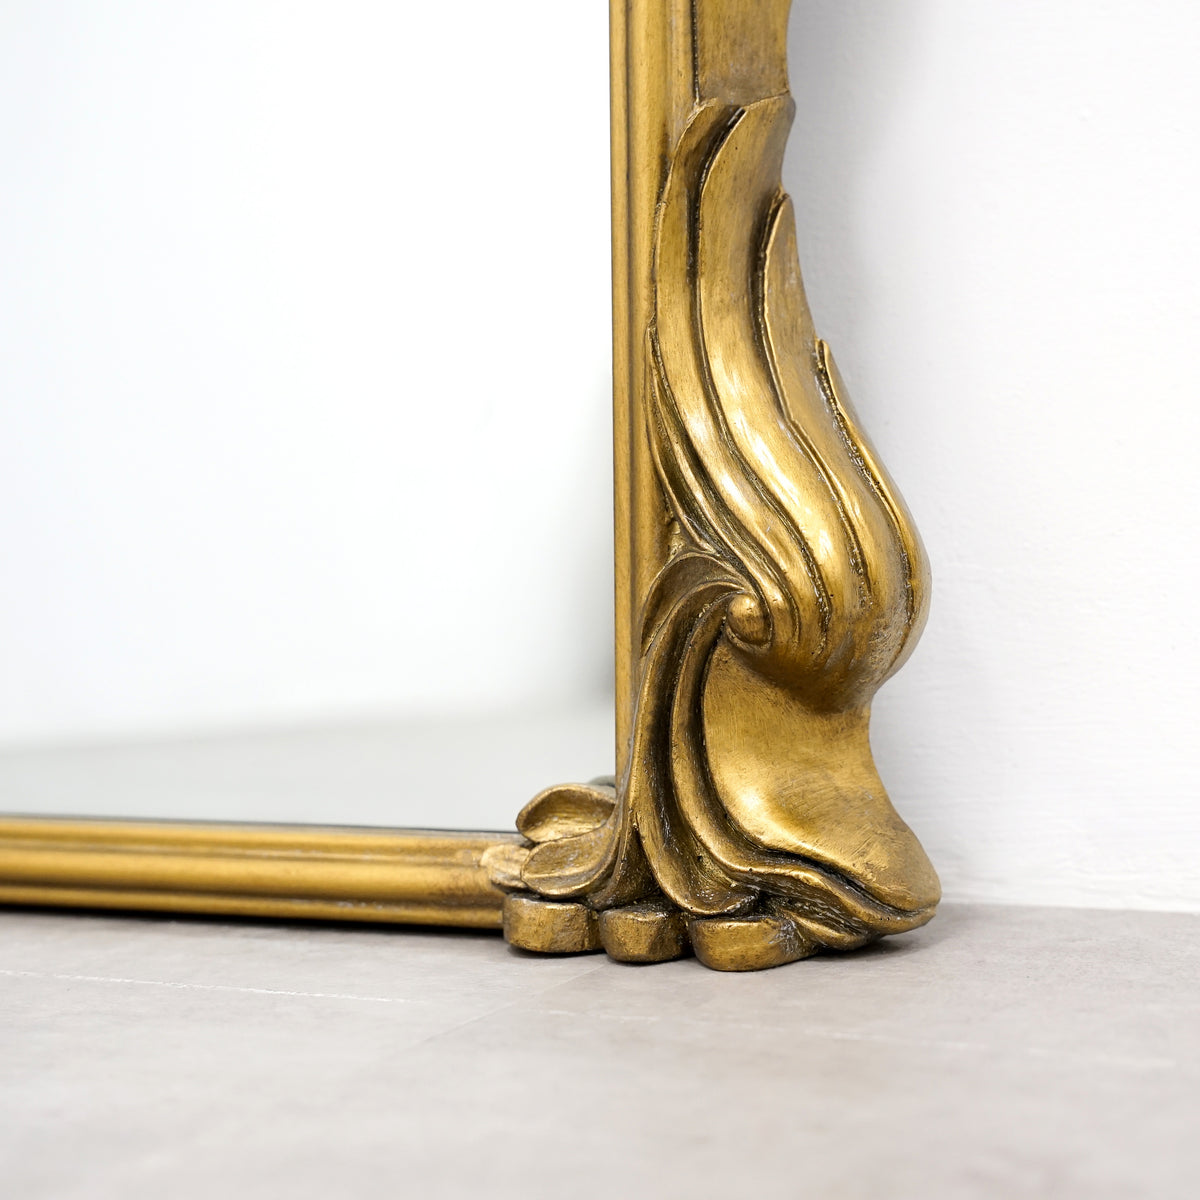 Detail shot of Full Length Gold Arched Ornate Metal Mirror frame design